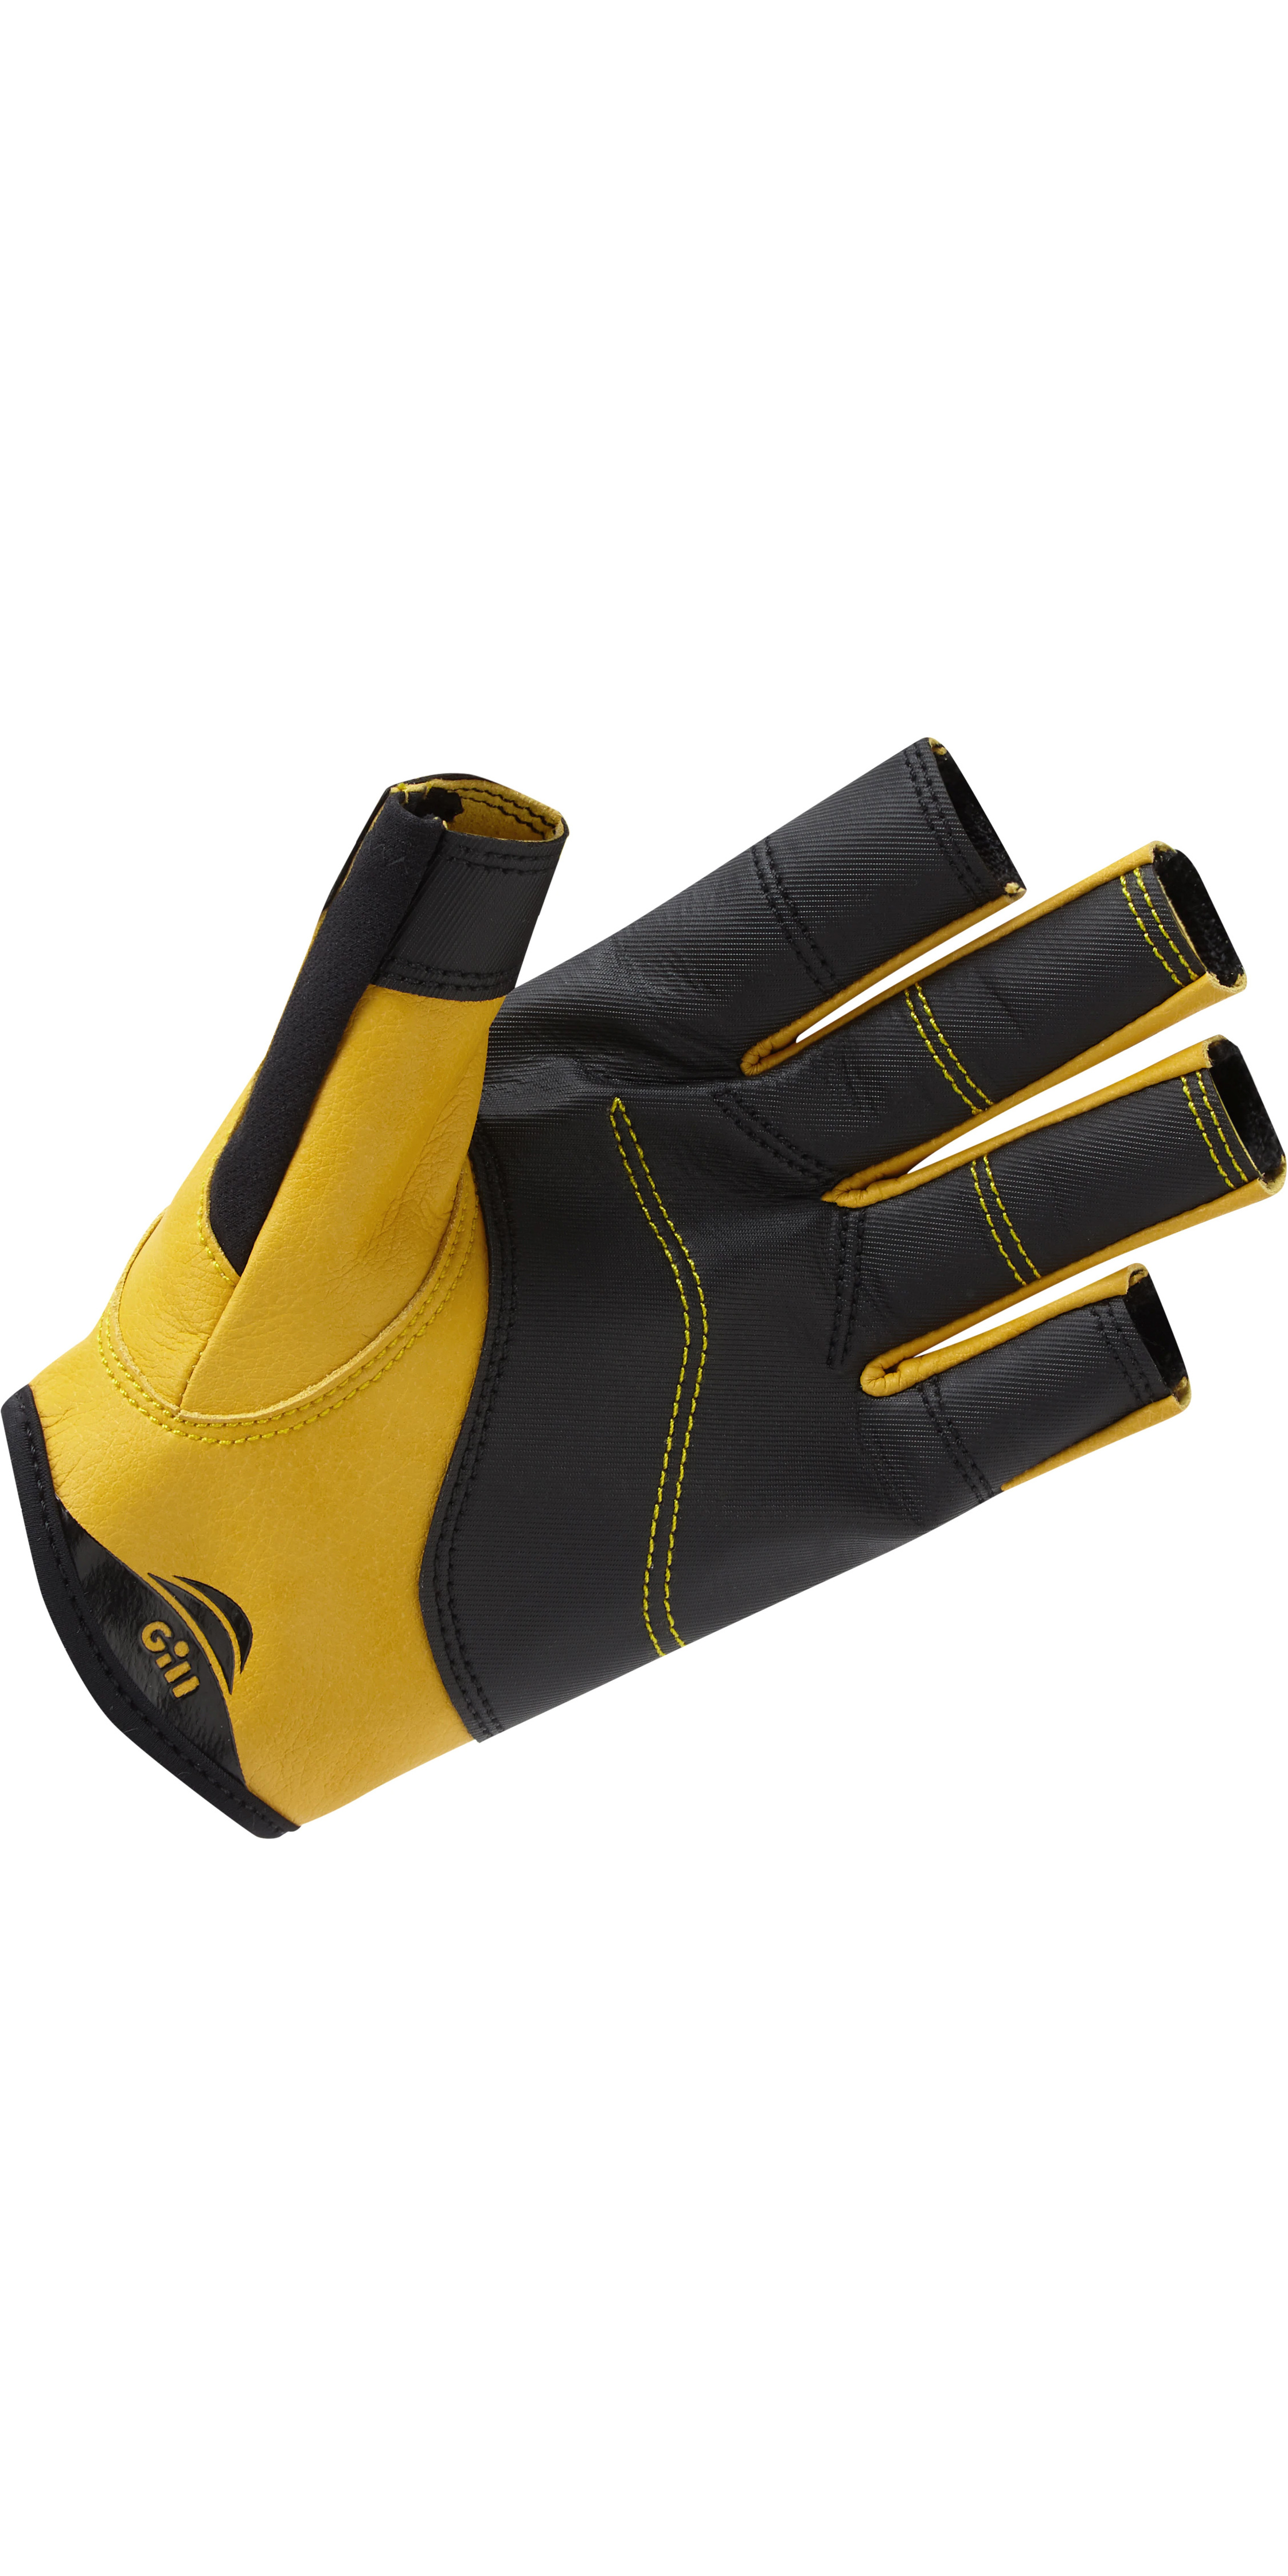 Pro Gloves - Long Finger - GB Gill Marine